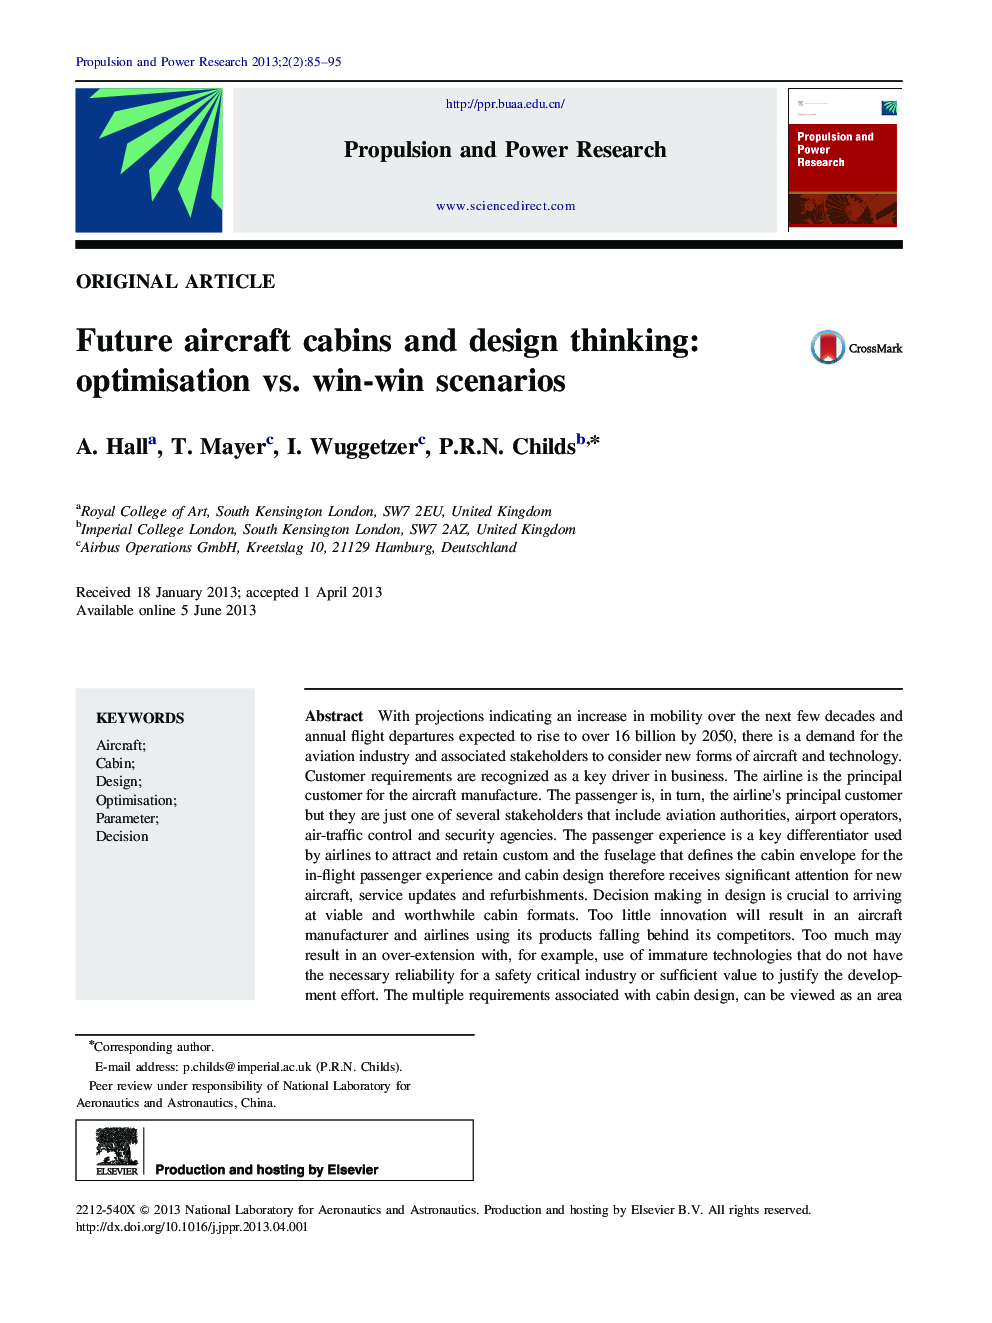 Future aircraft cabins and design thinking: optimisation vs. win-win scenarios 